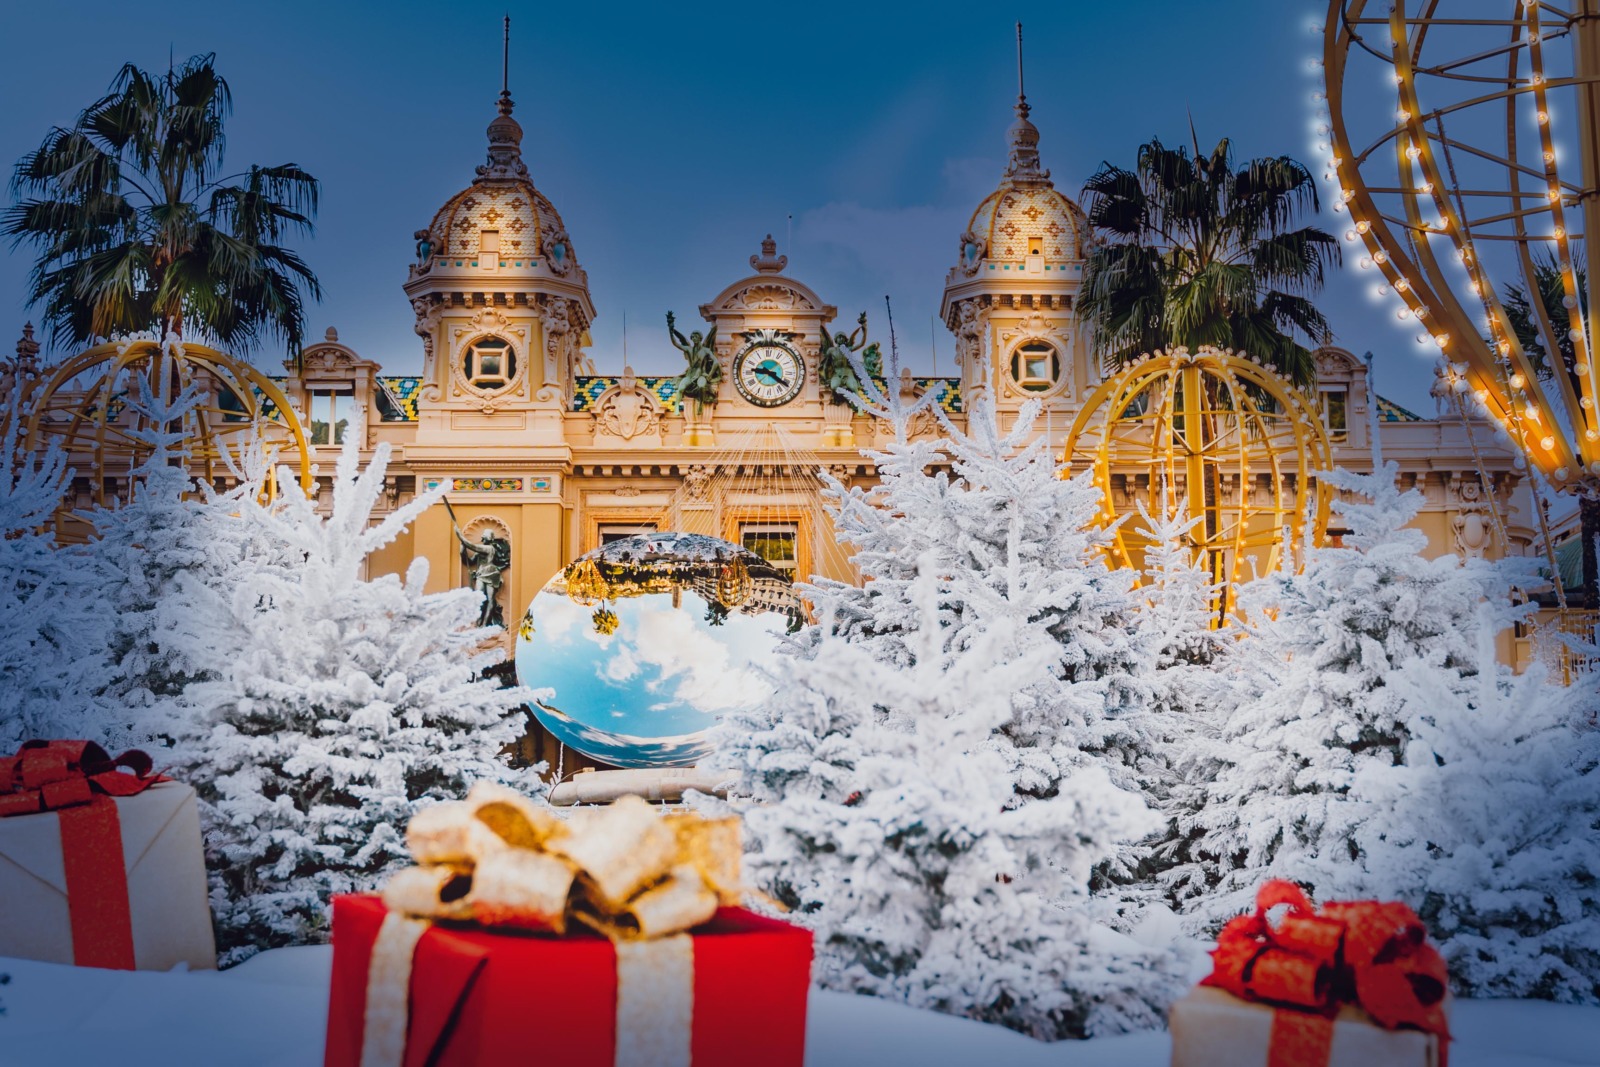 Monaco: the Casino at Christmas. Photo @natakorenikha16 via Twenty20